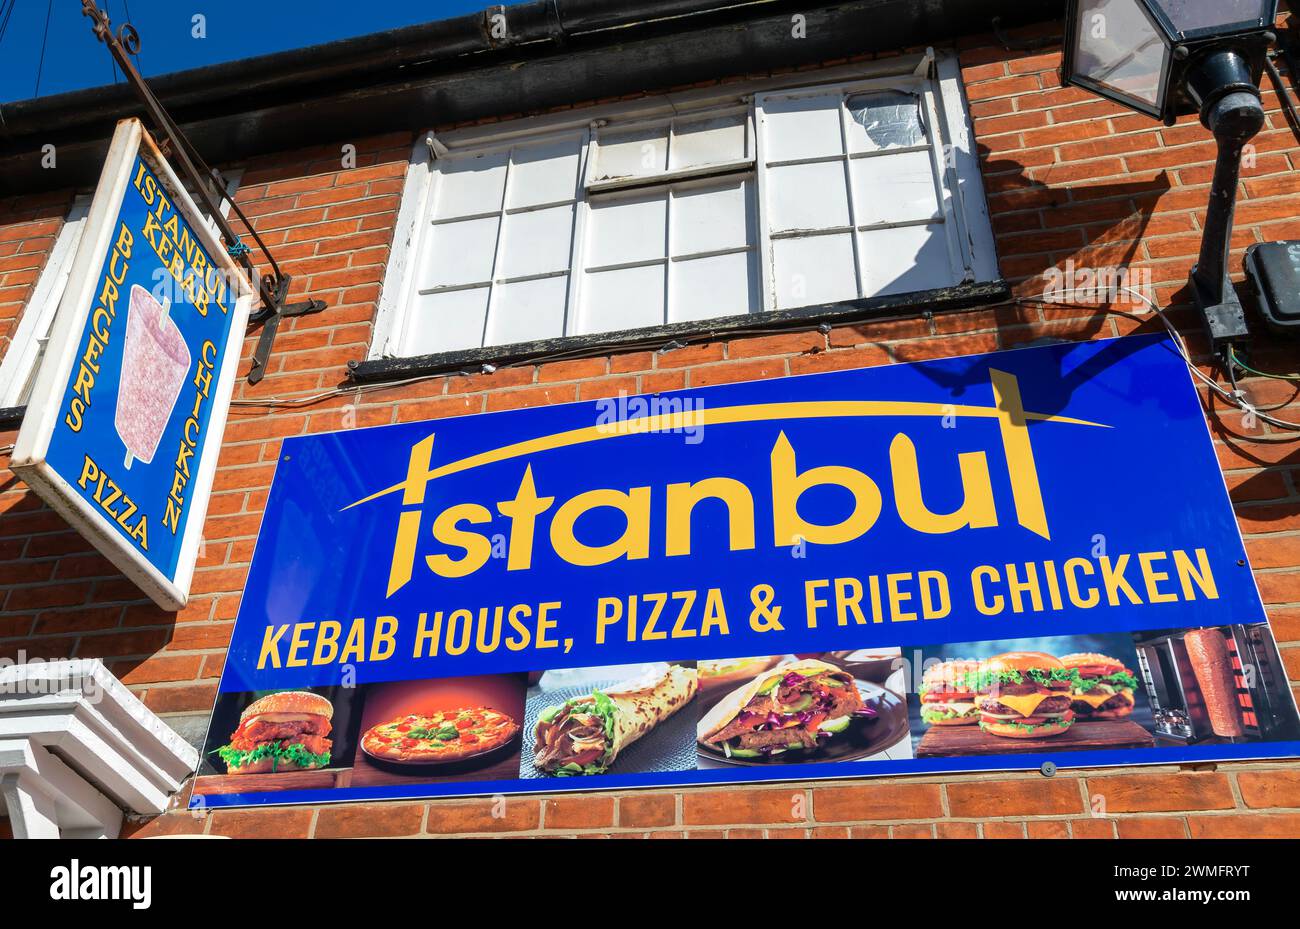 Istanbul kebab burgers pizza chicken, take-away restaurant signs, Halesworth, Suffolk, England, UK Stock Photo